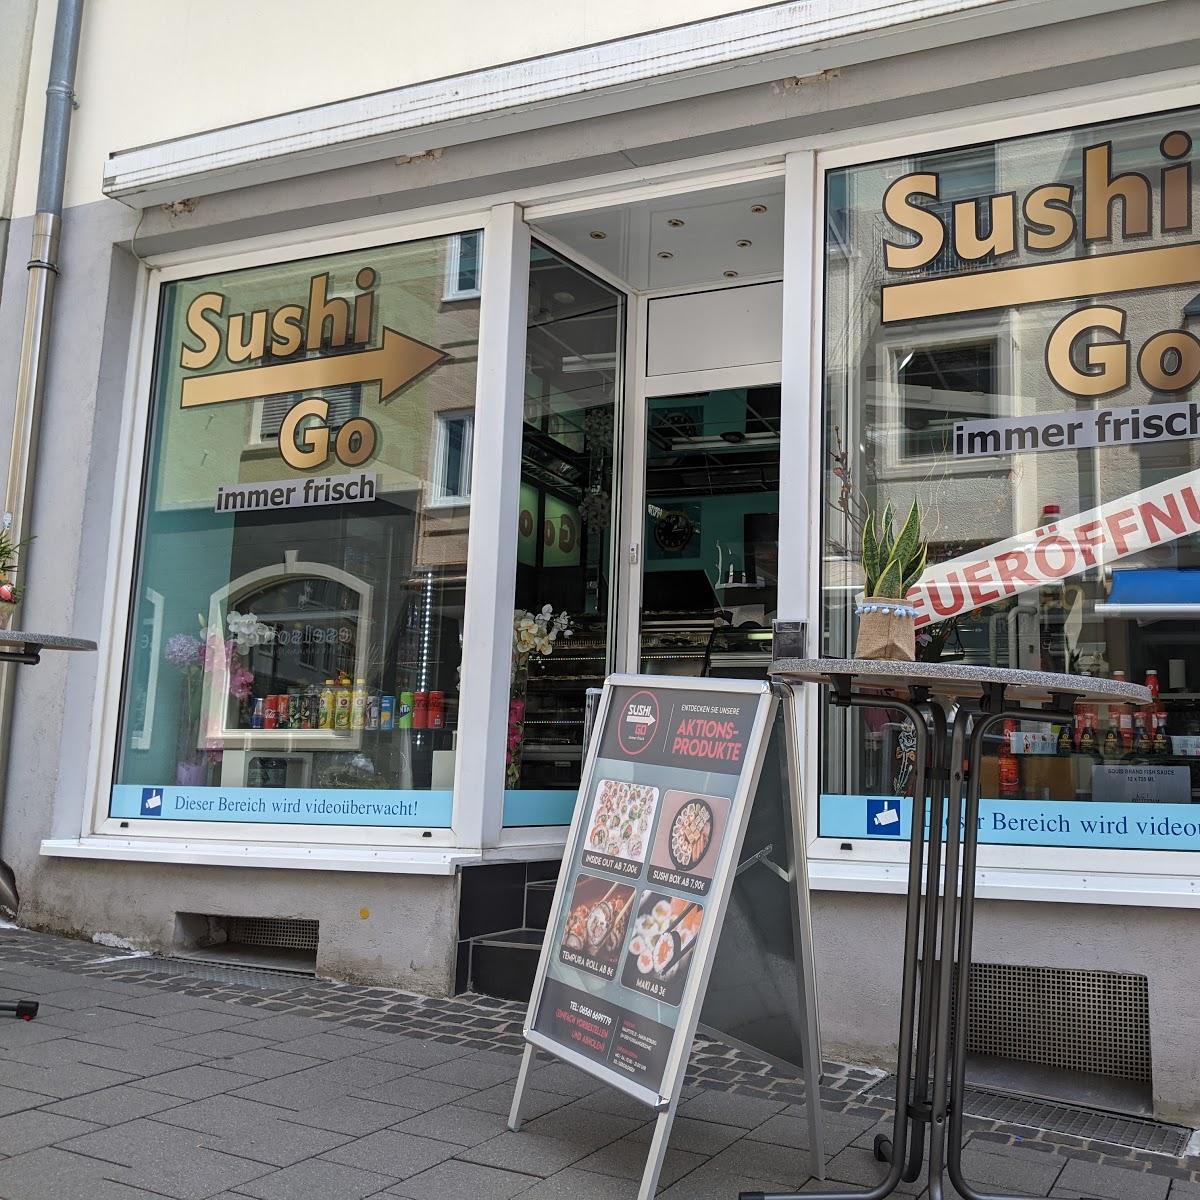 Restaurant "Sushi Go" in Bitburg